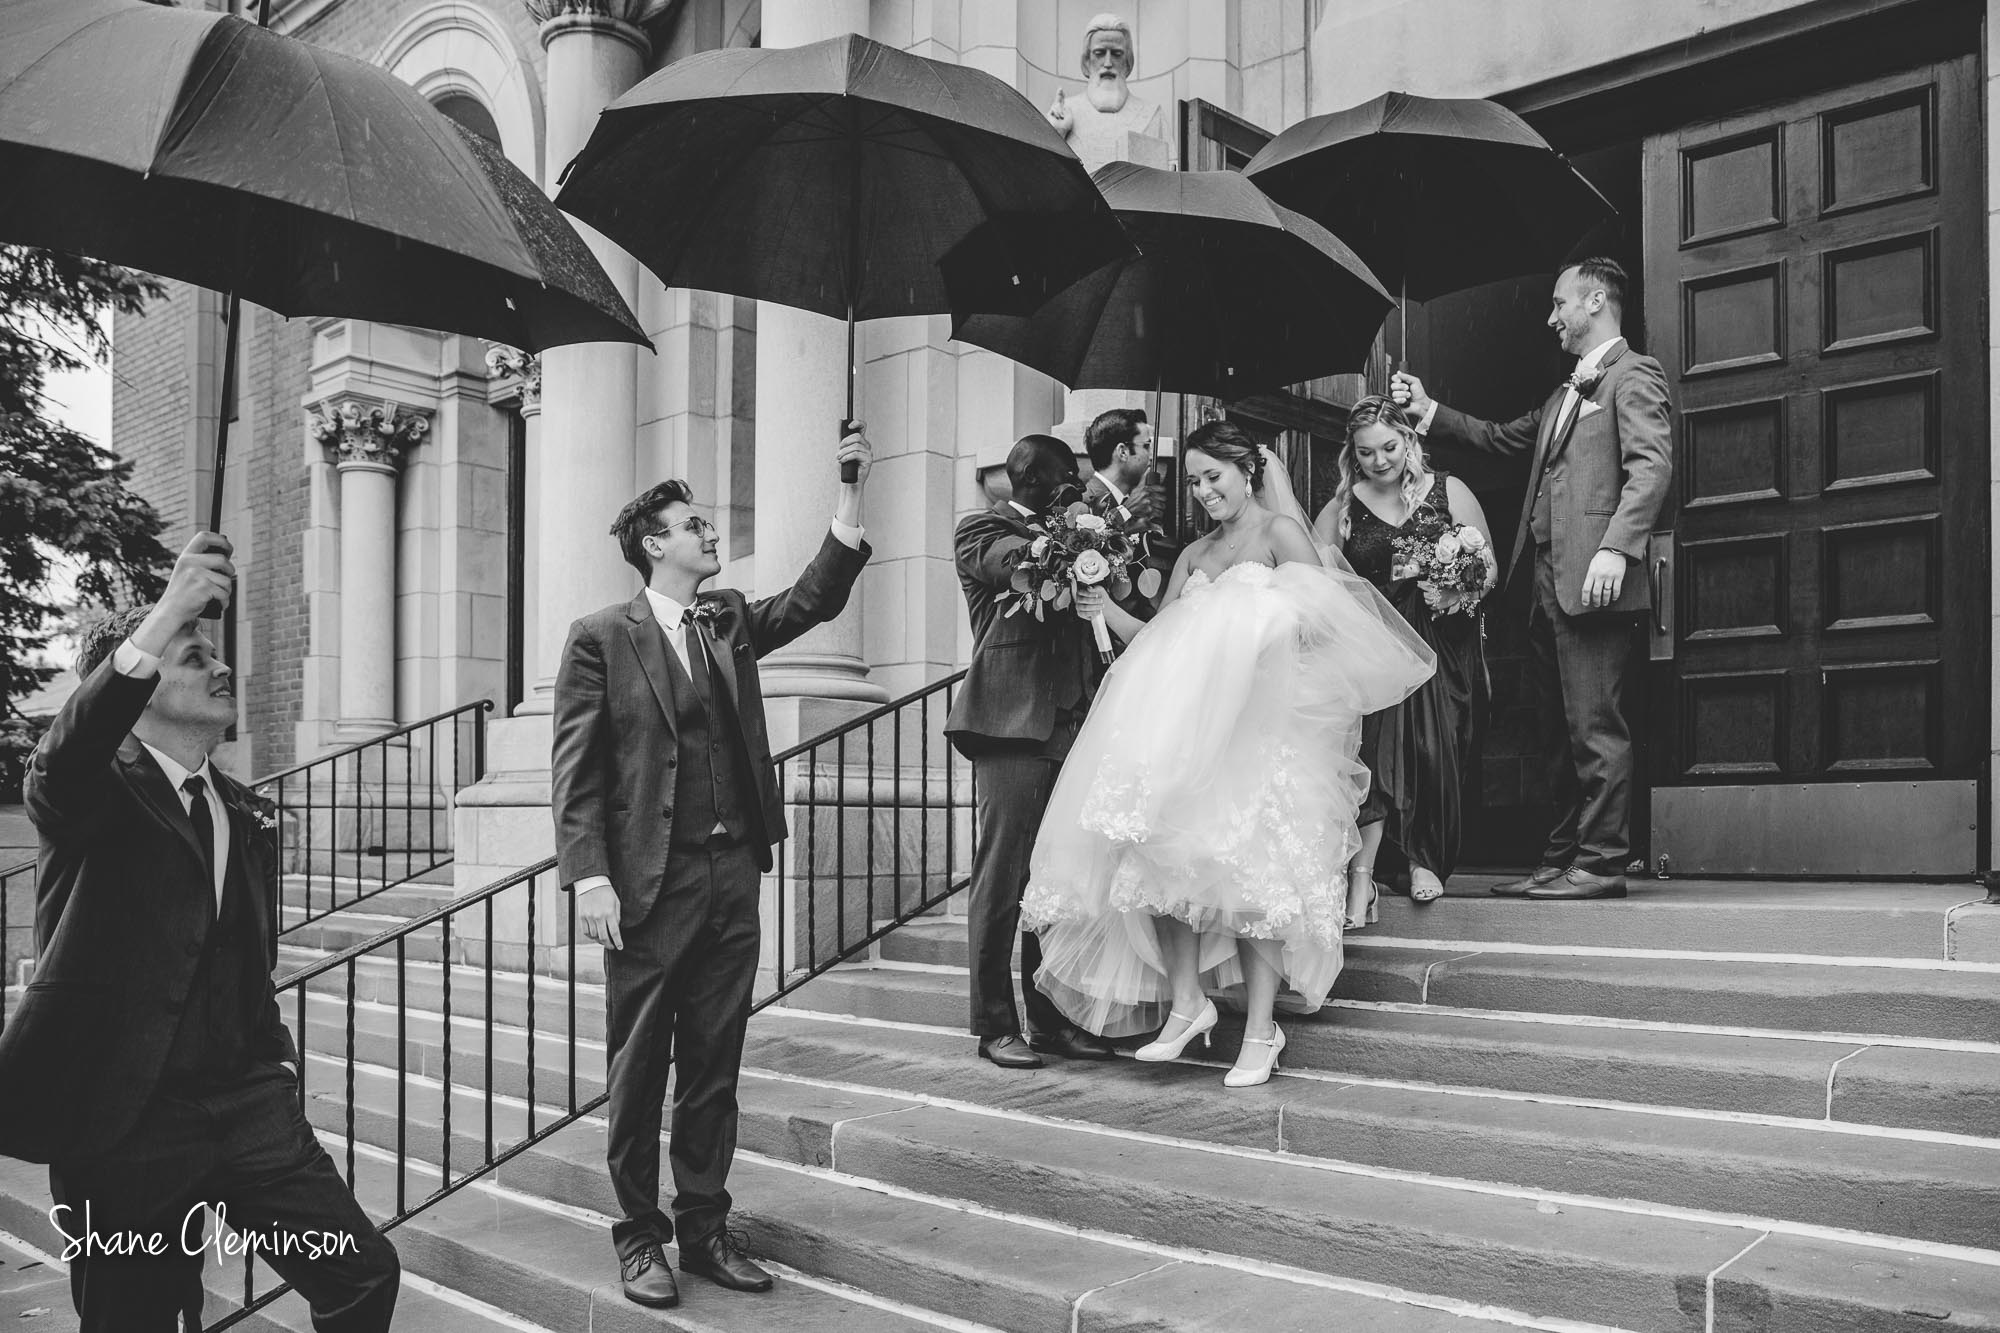 Rain on your wedding day!